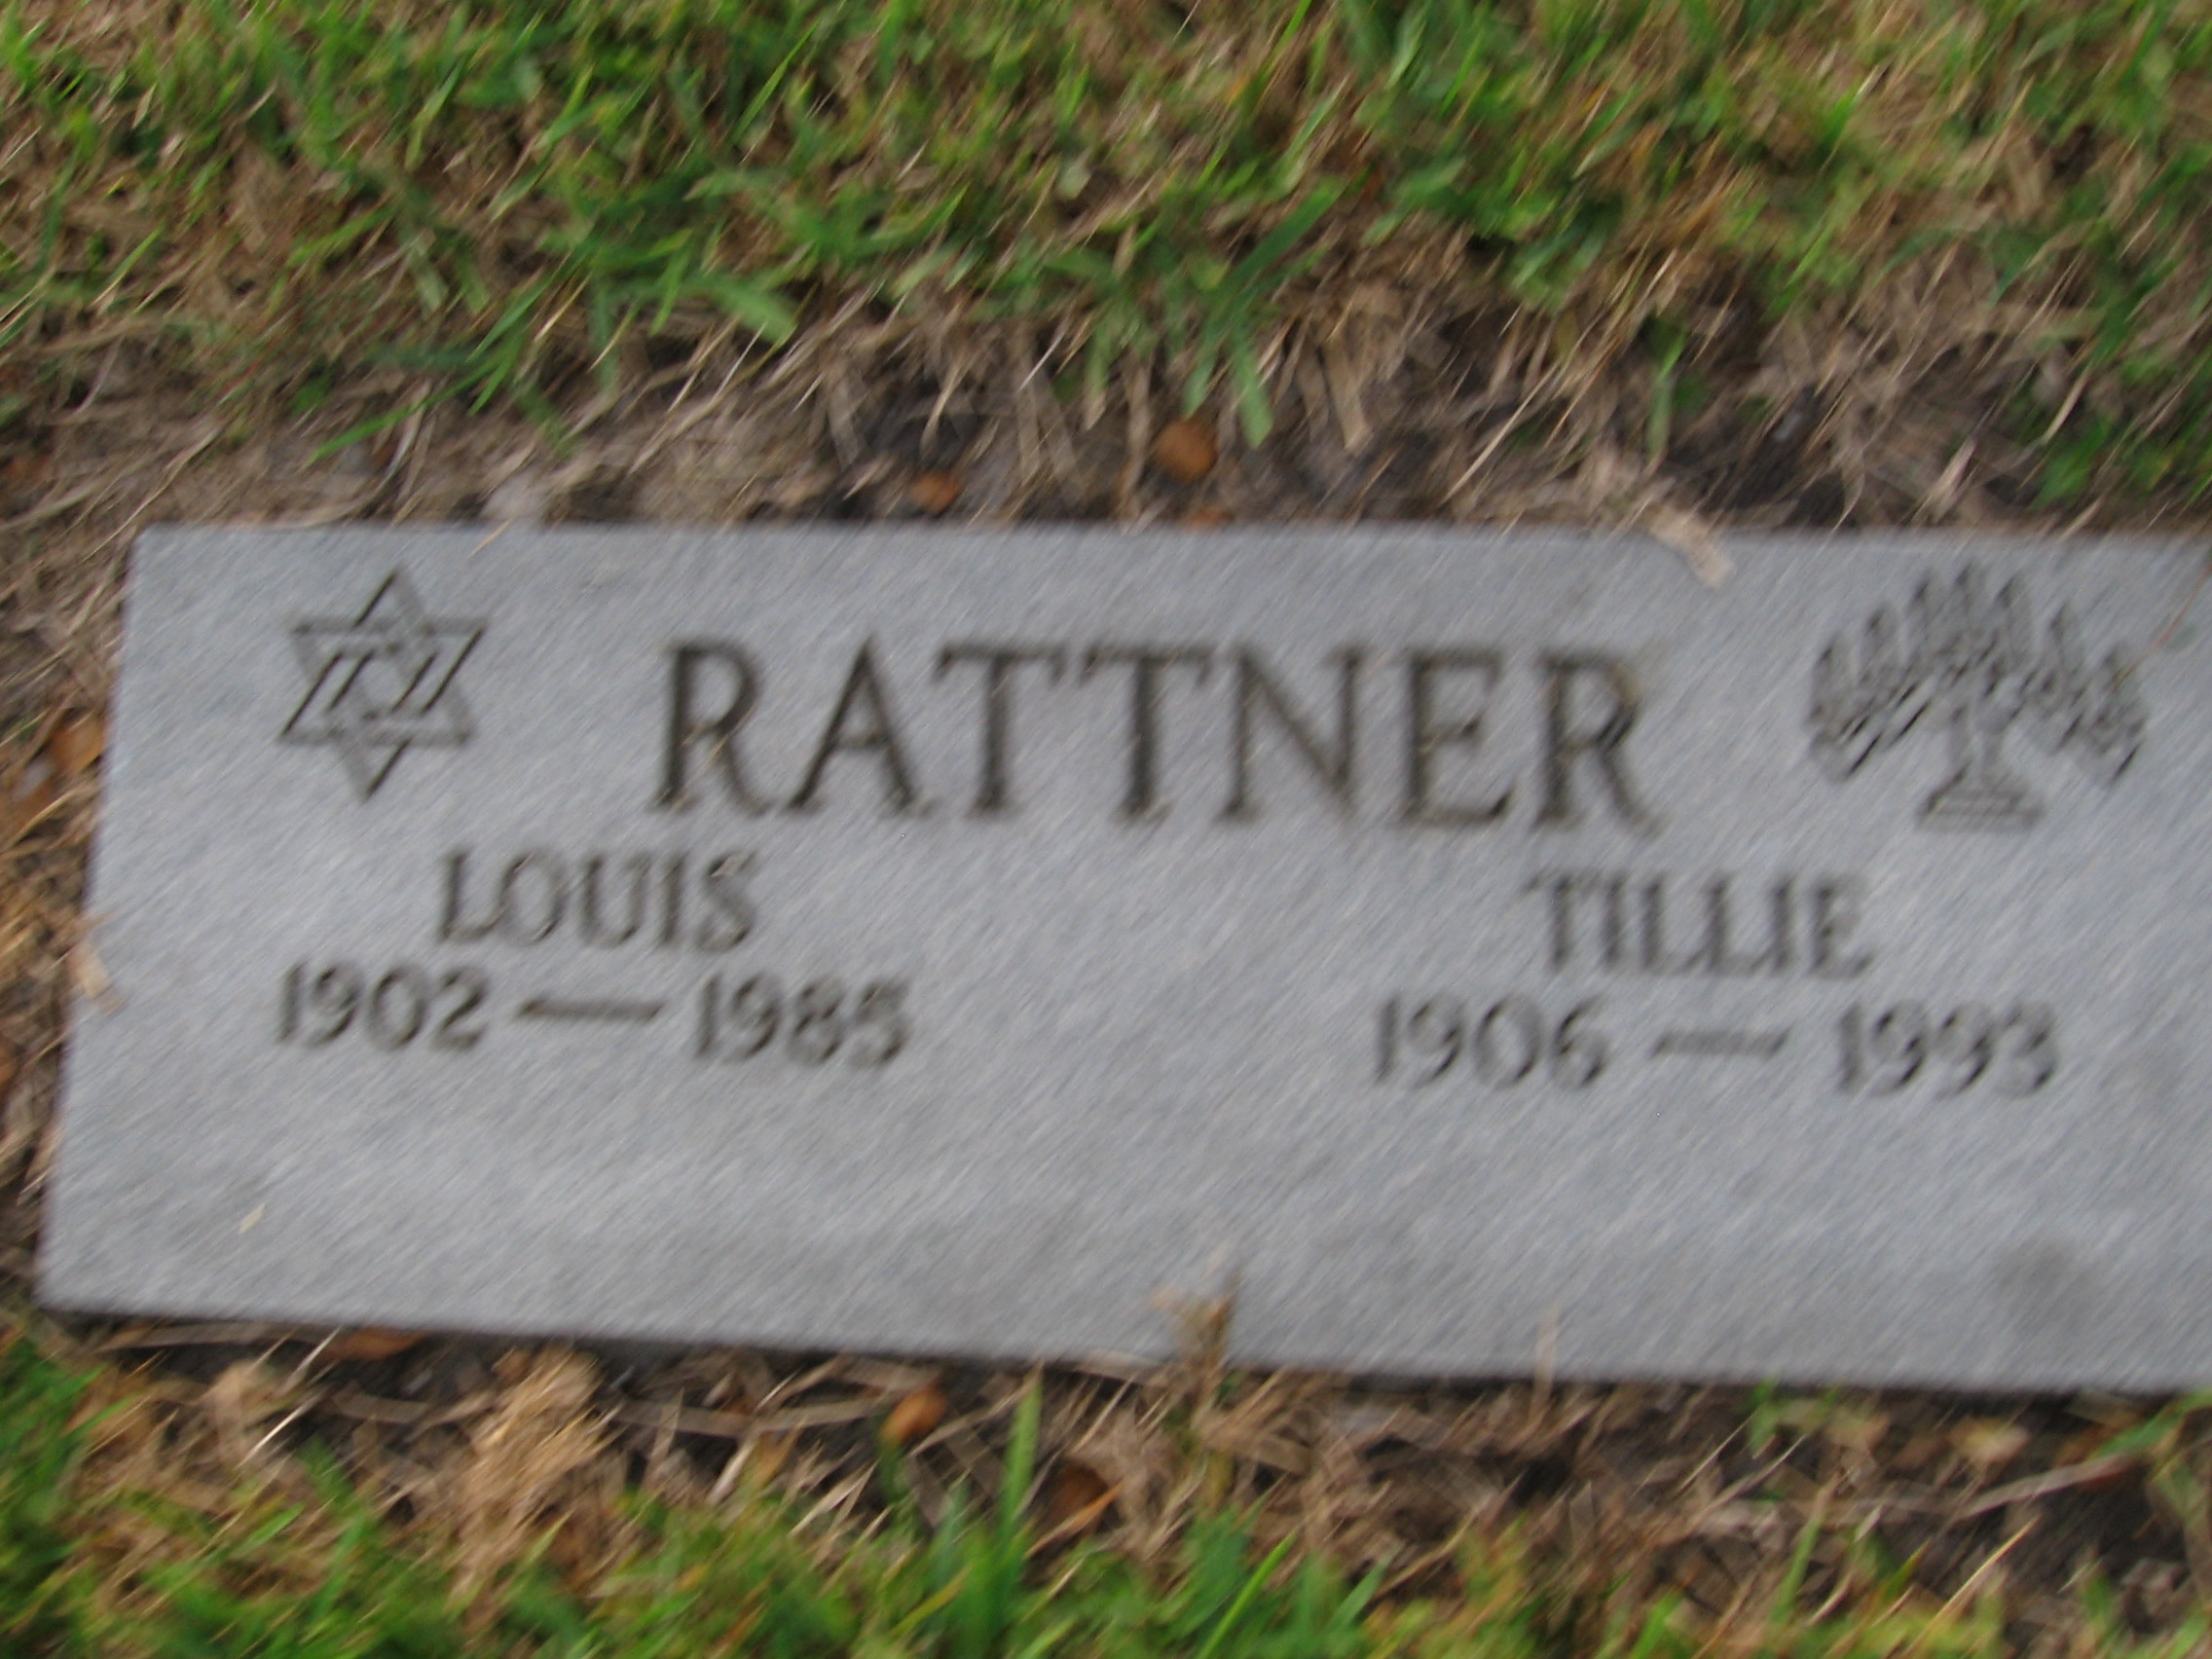 Louis Rattner